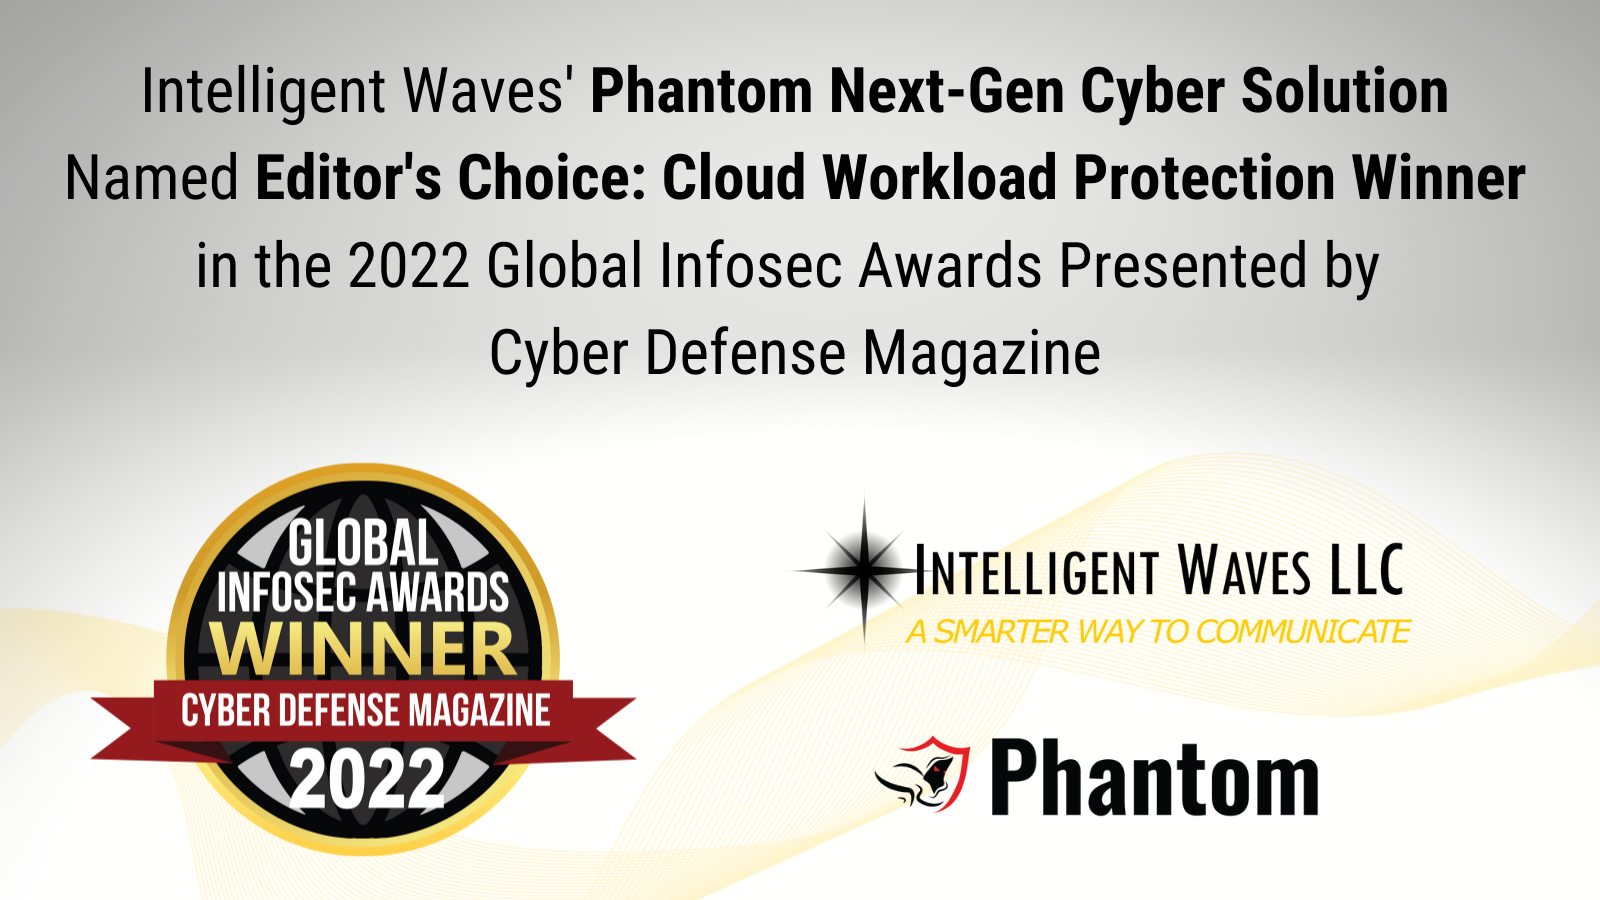 Phantom Cloud Workload Protection graphic